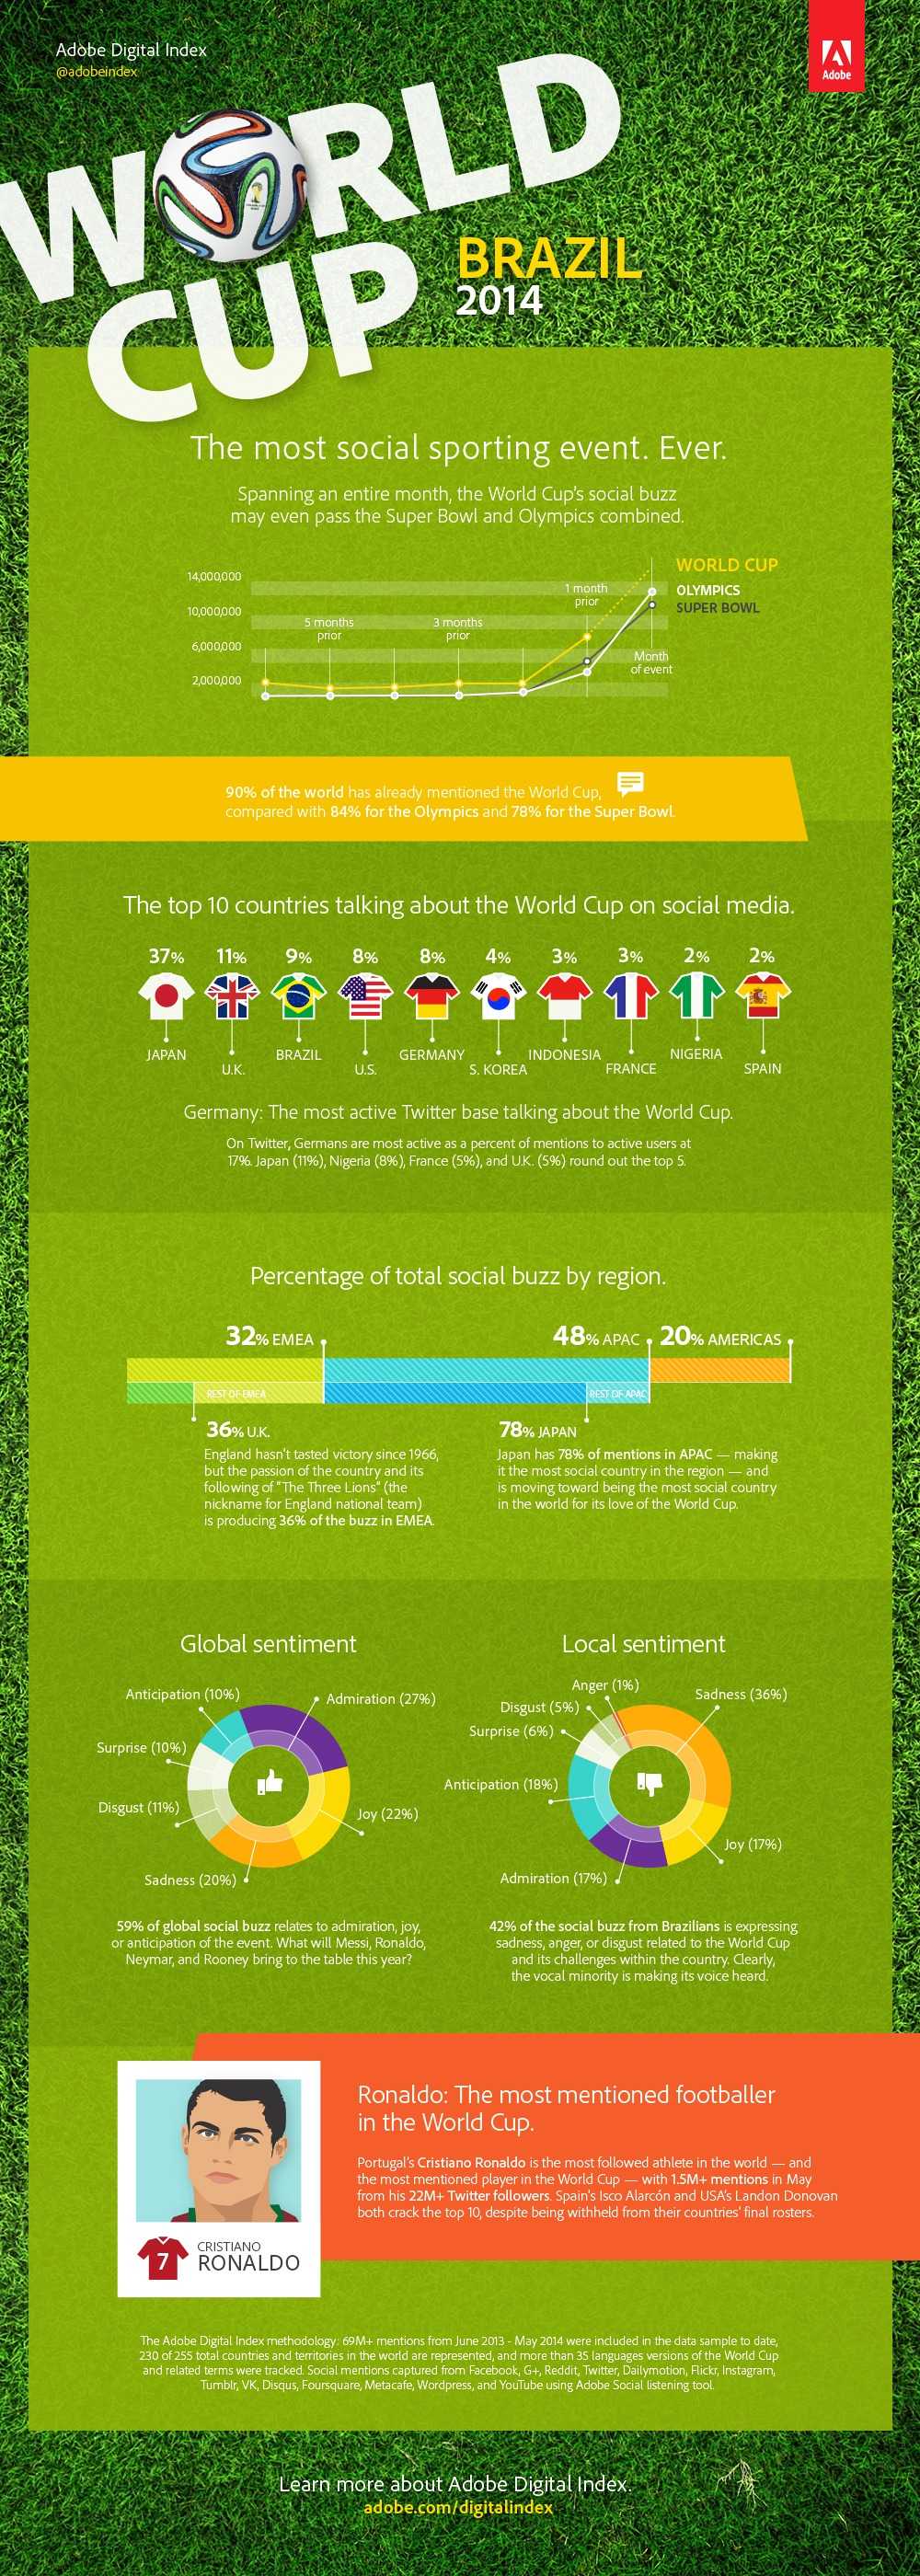 ADI_worldcup_infographic